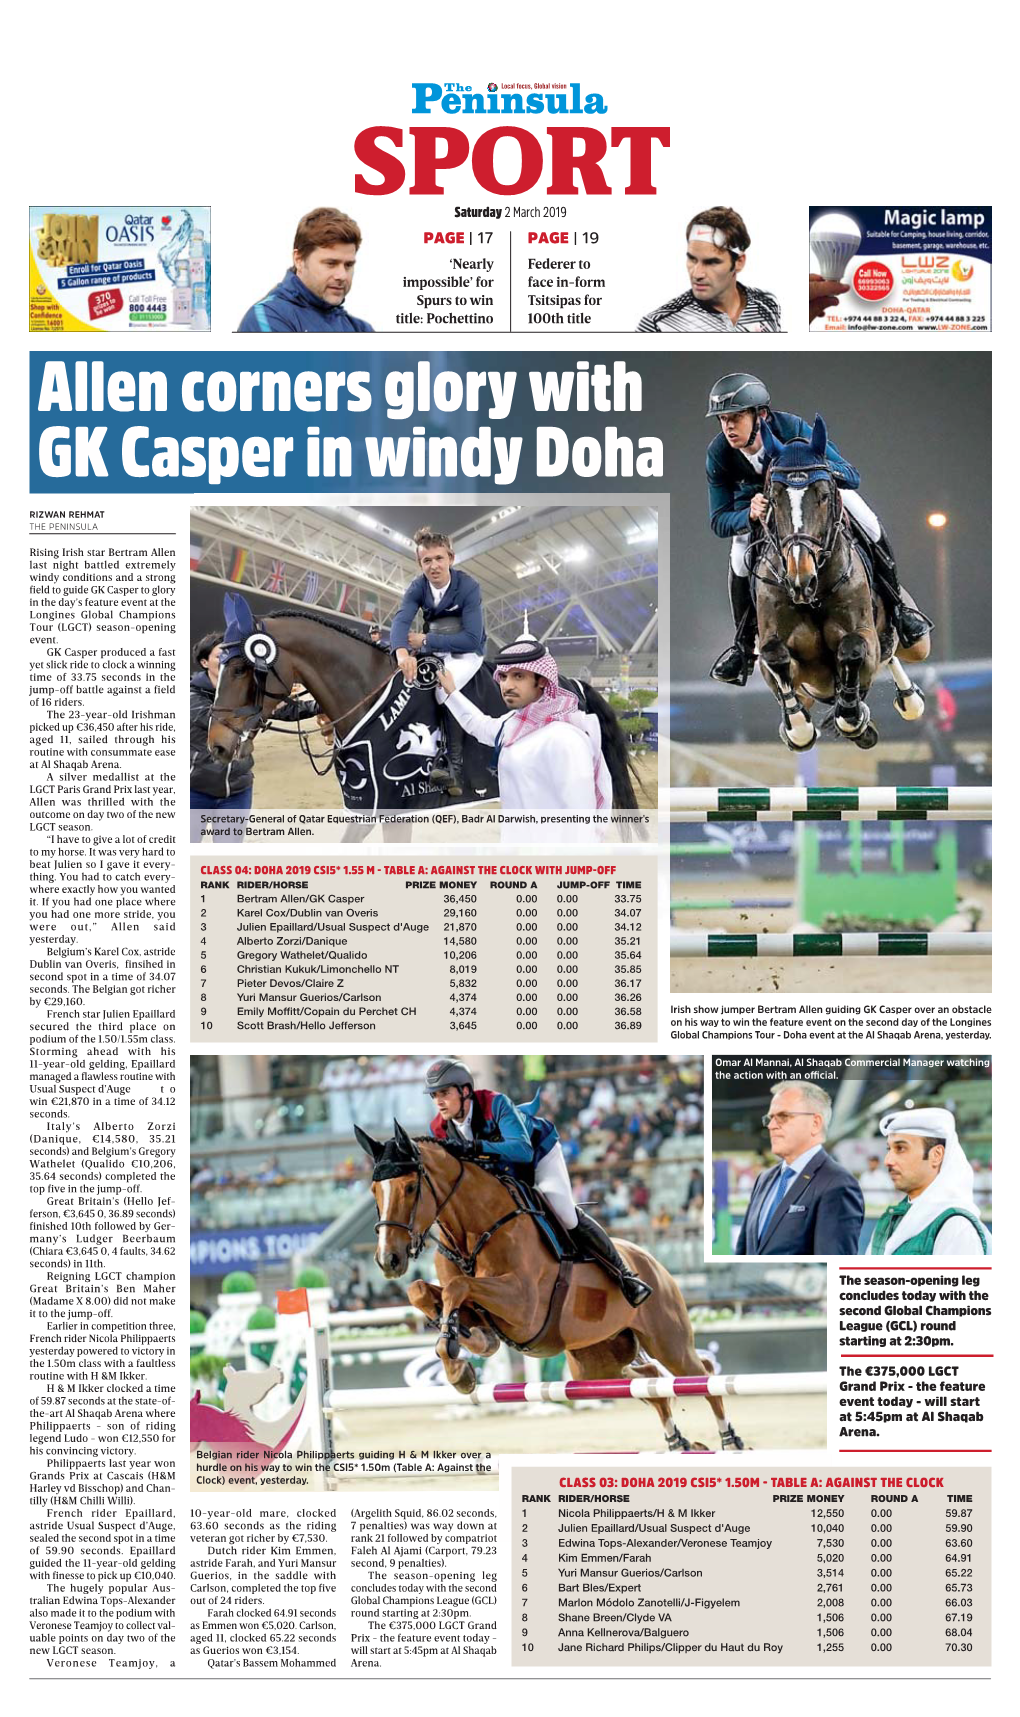 Allen Corners Glory with GK Casper in Windy Doha